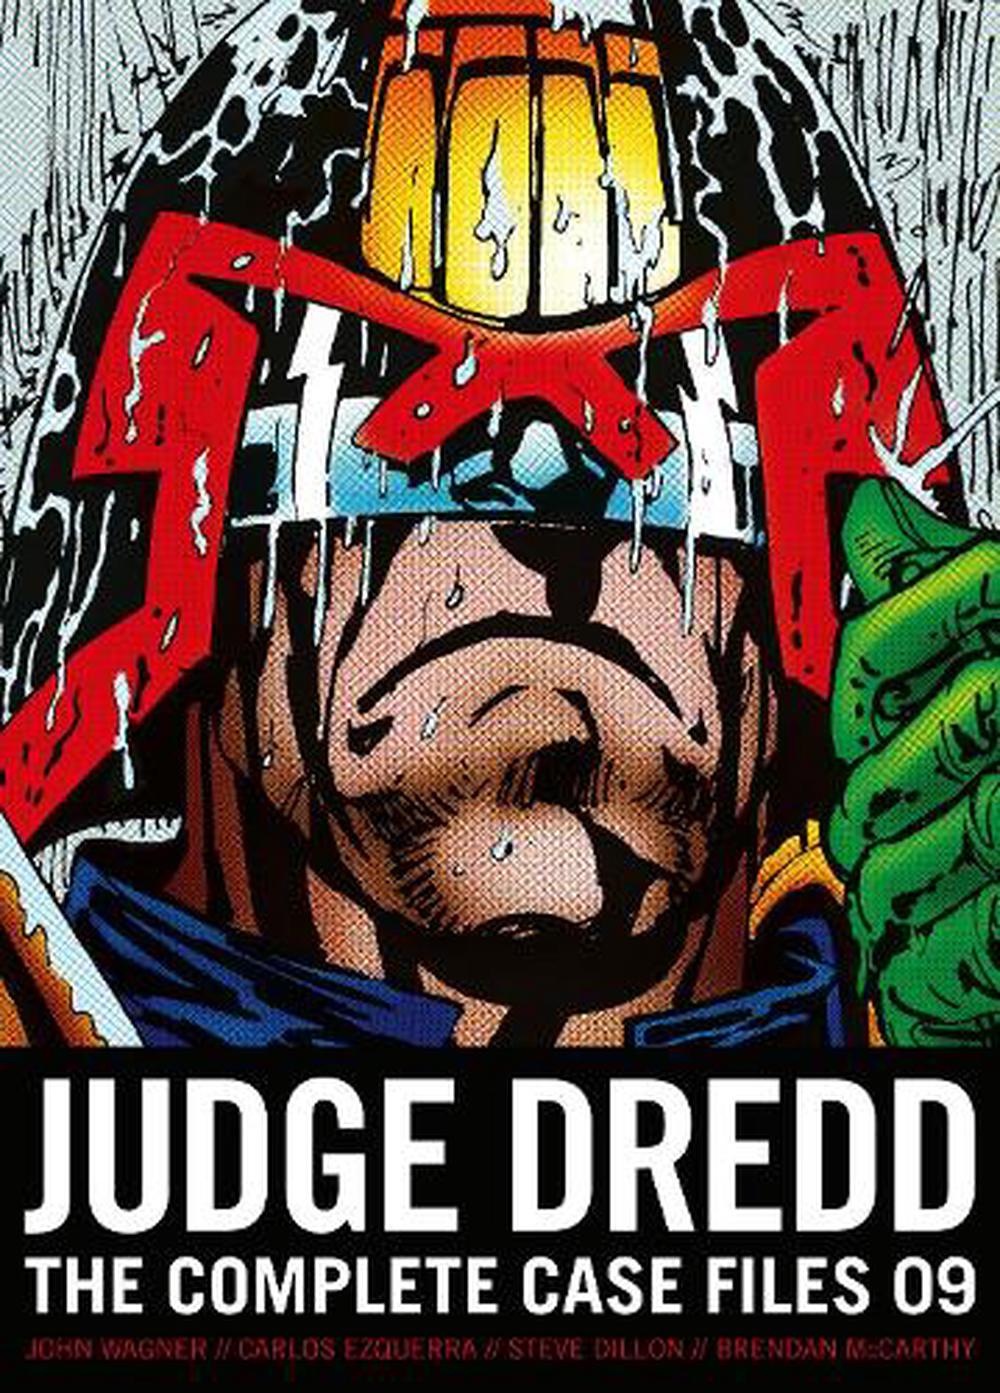 download judge dredd alan grant